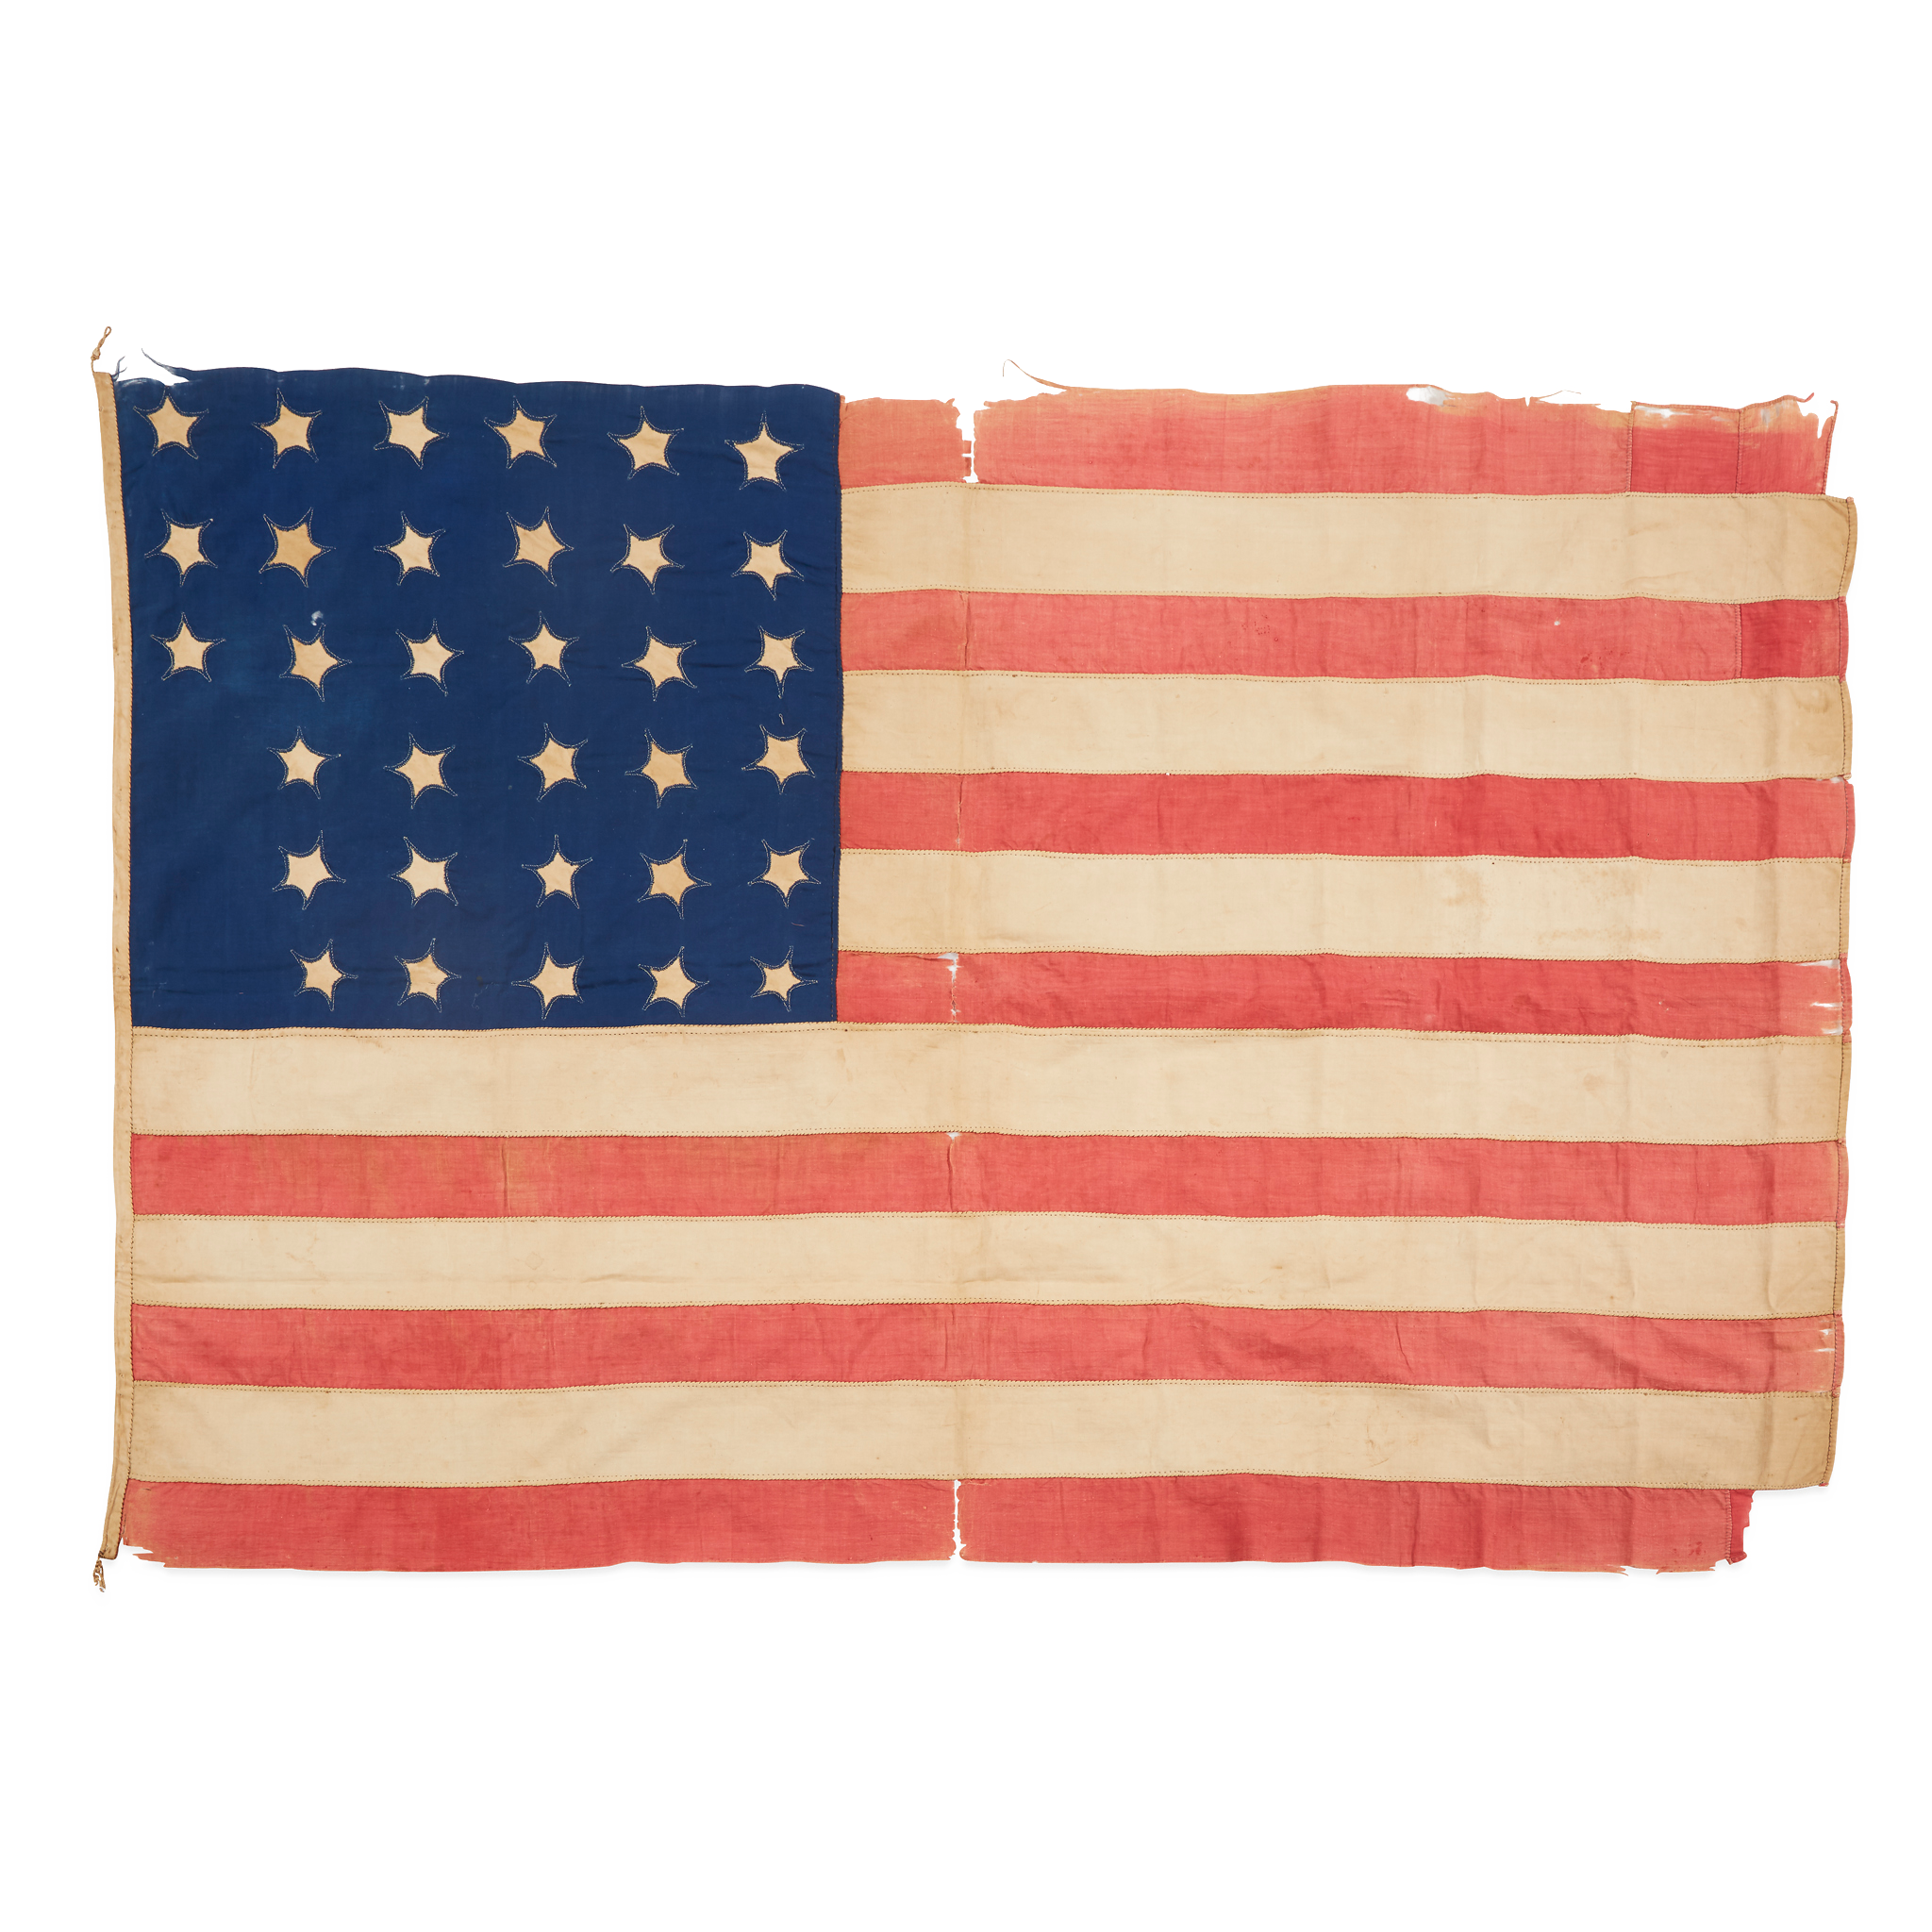 Lot 43 | A 33-Star American Flag with Civil War, First Battle of Bull Run association, circa 1860, $20,000-30,000